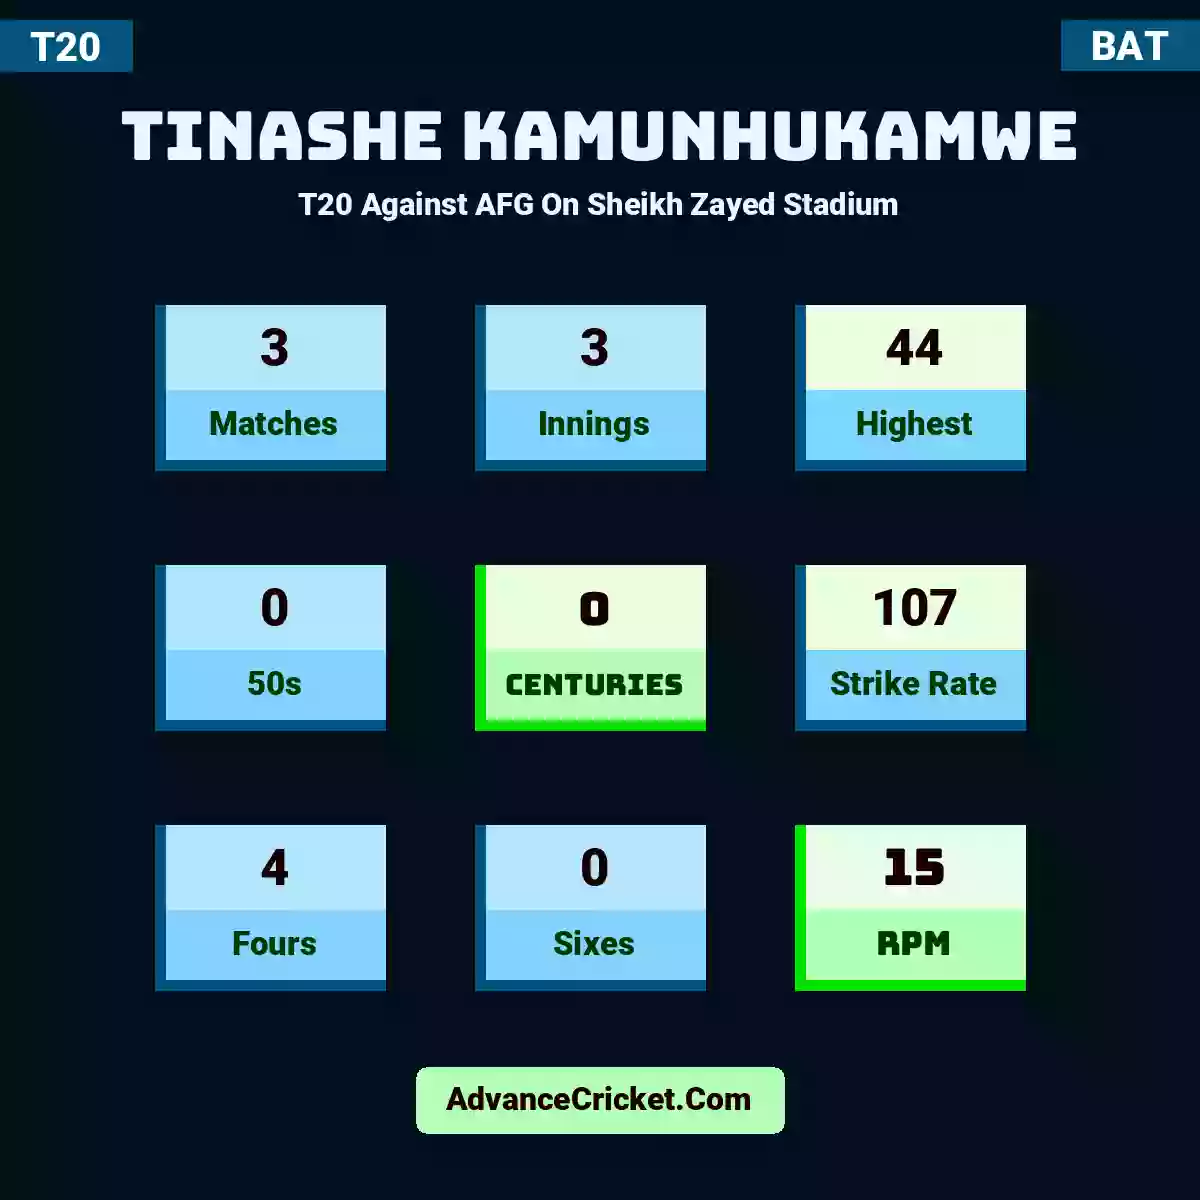 Tinashe Kamunhukamwe T20  Against AFG On Sheikh Zayed Stadium, Tinashe Kamunhukamwe played 3 matches, scored 44 runs as highest, 0 half-centuries, and 0 centuries, with a strike rate of 107. T.Kamunhukamwe hit 4 fours and 0 sixes, with an RPM of 15.